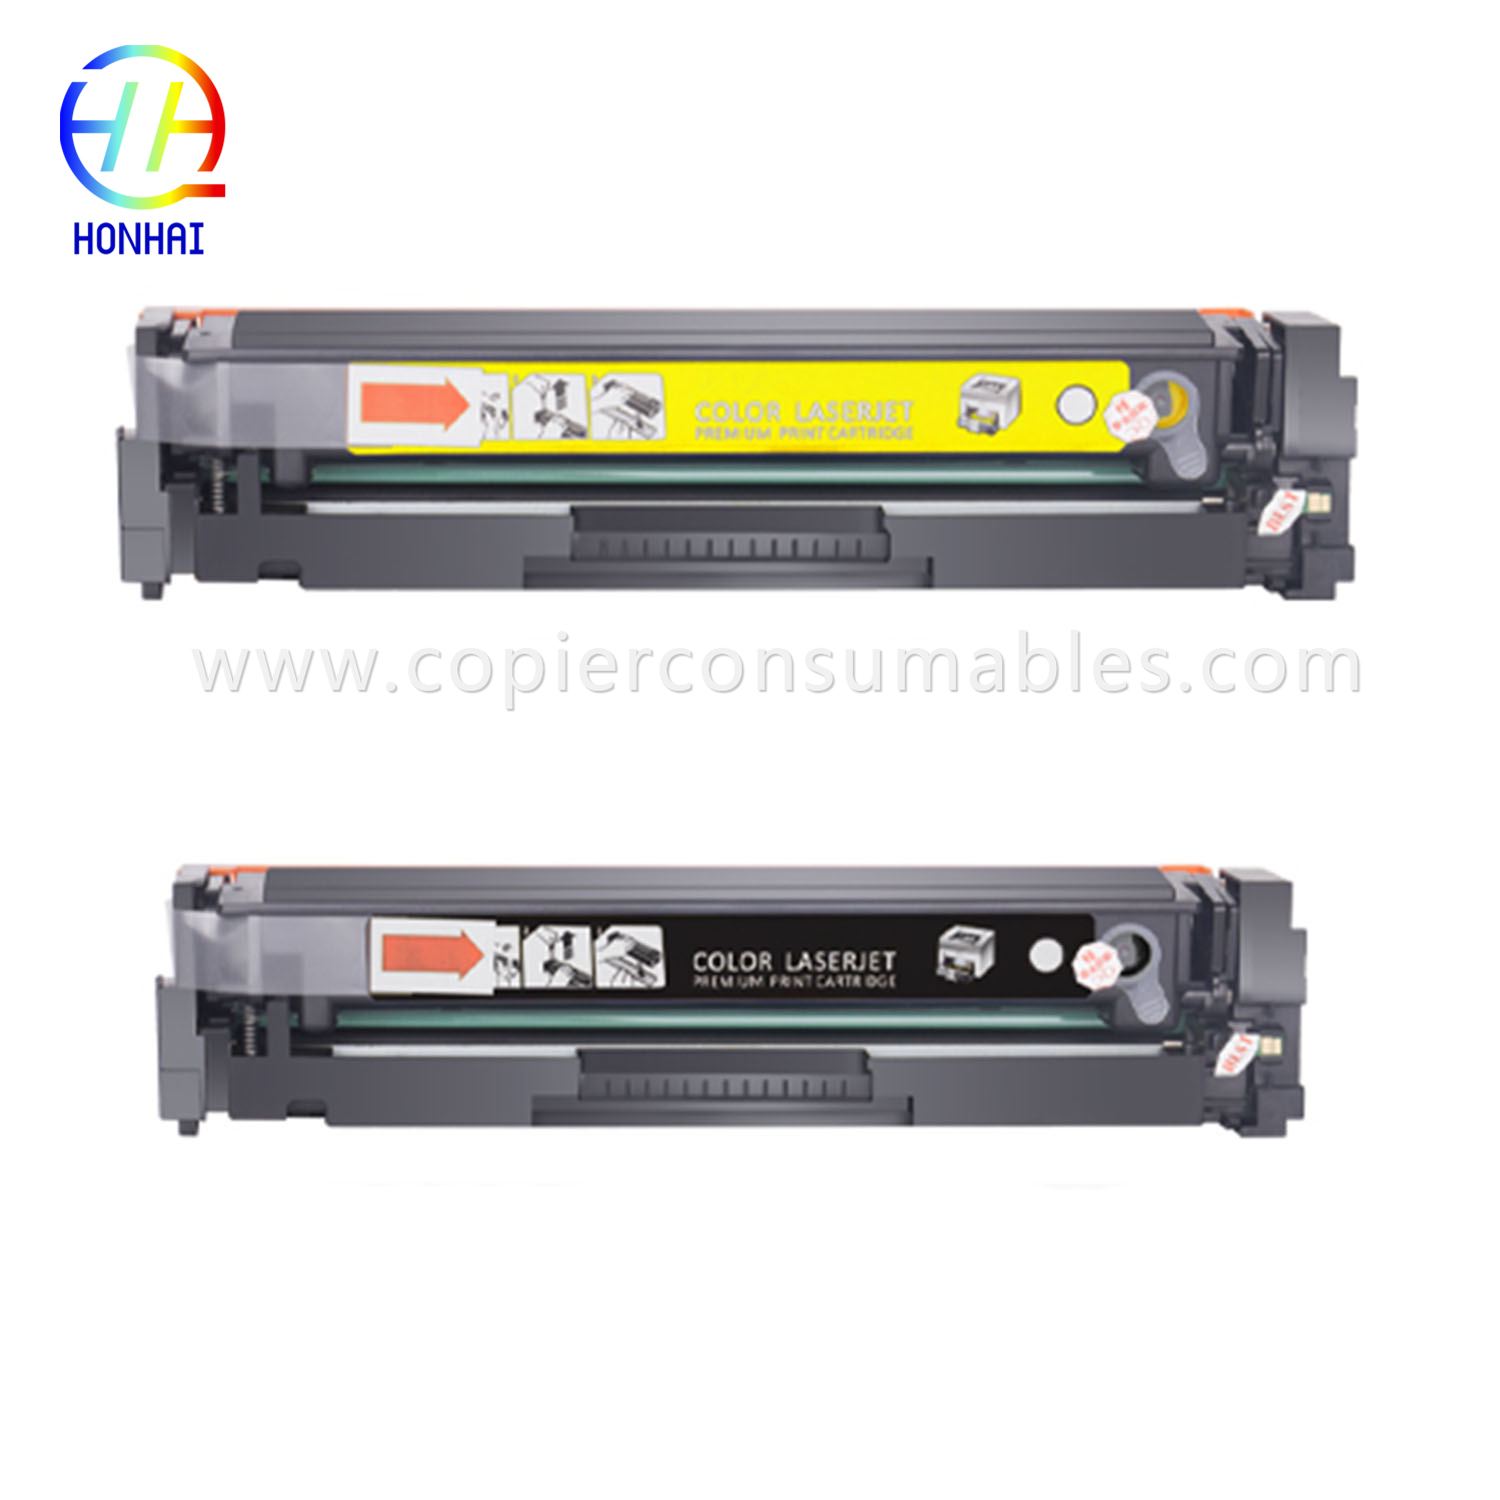 Kartrij Toner untuk HP Color Laserjet PRO Mfp M180 M180n M181 M181fw M154A M154nw (CF531A CF532A CF533A) (2) 拷贝